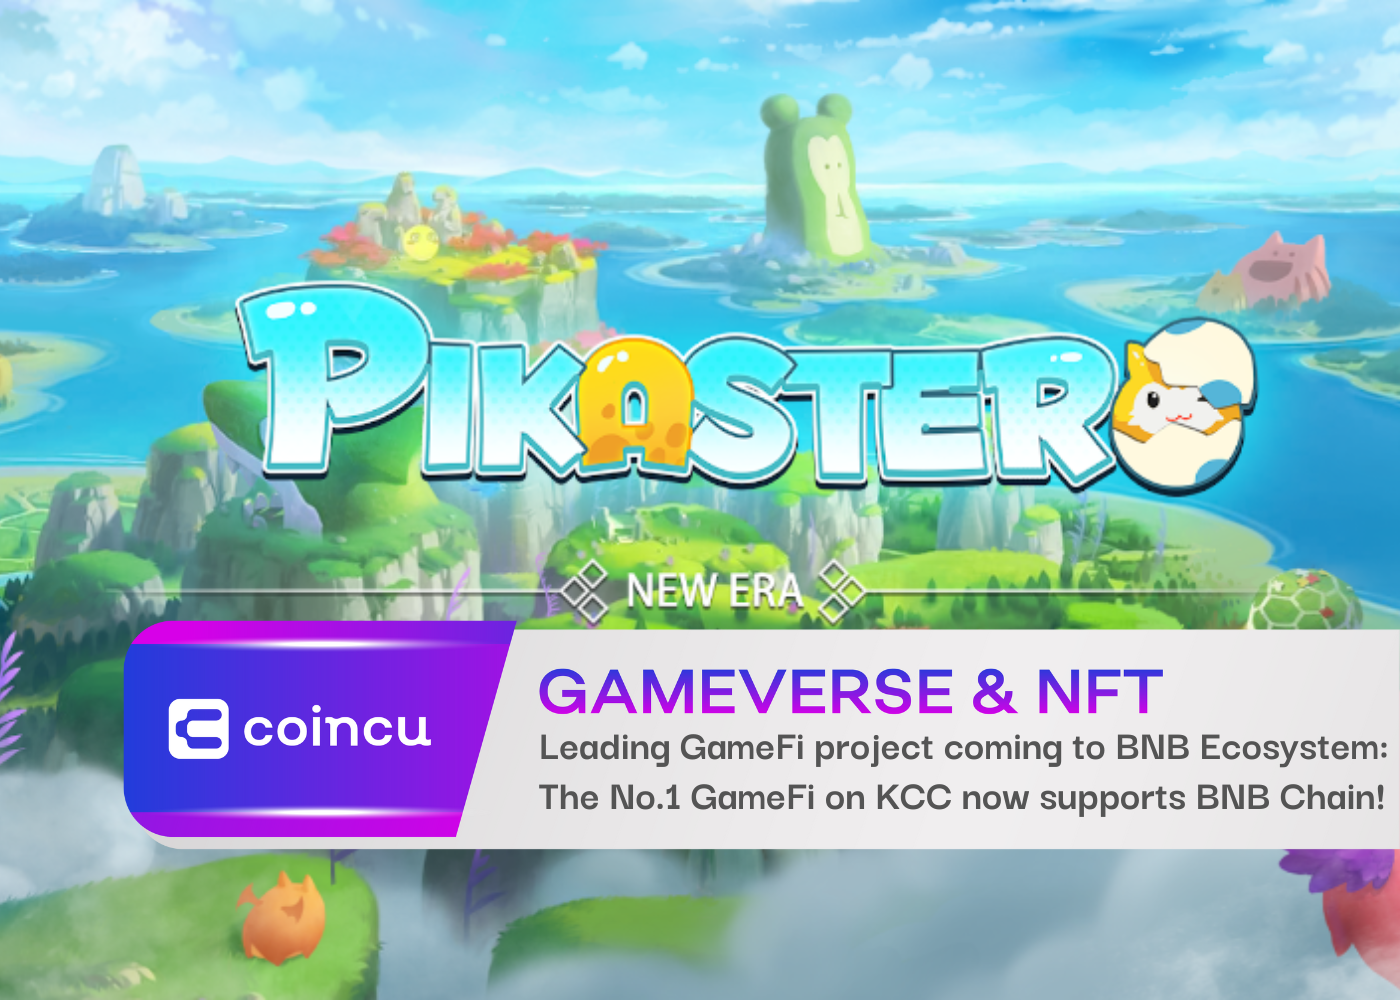 Pikaster - o projeto GameFi líder no KCC